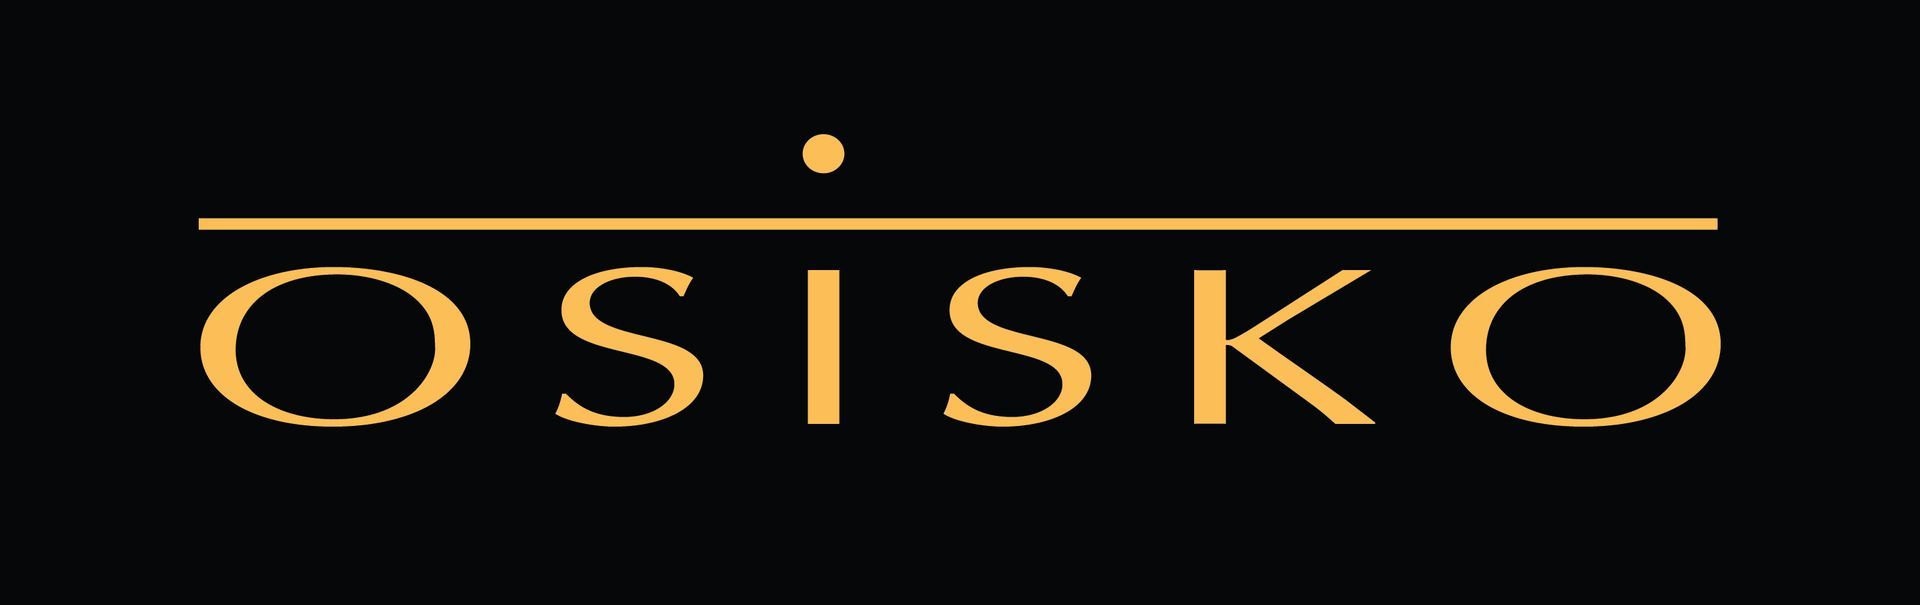 OSISKO logo